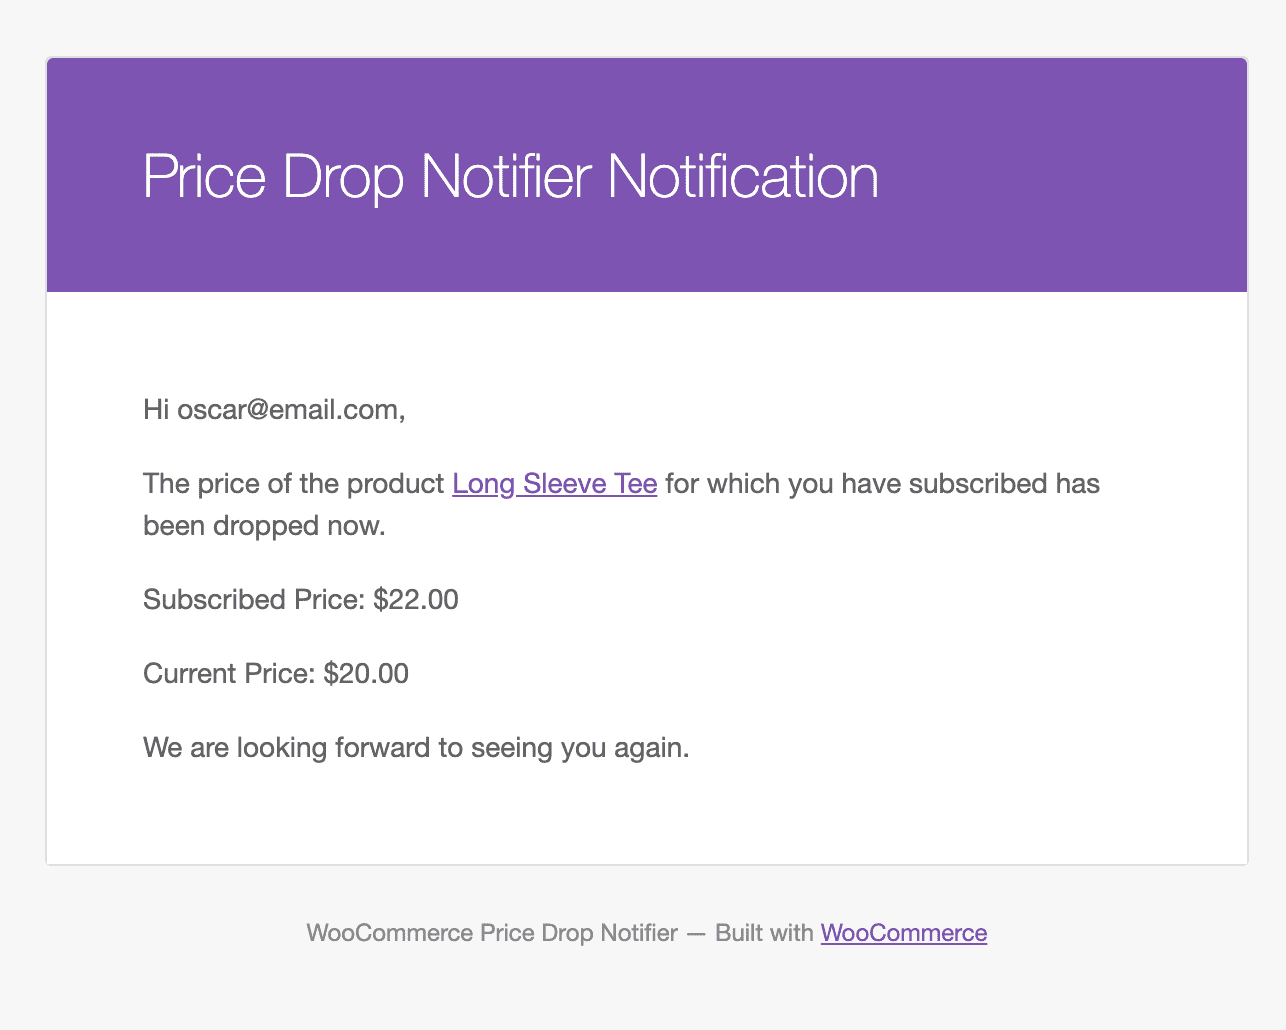 WooCommerce Price Drop Notifier email notification